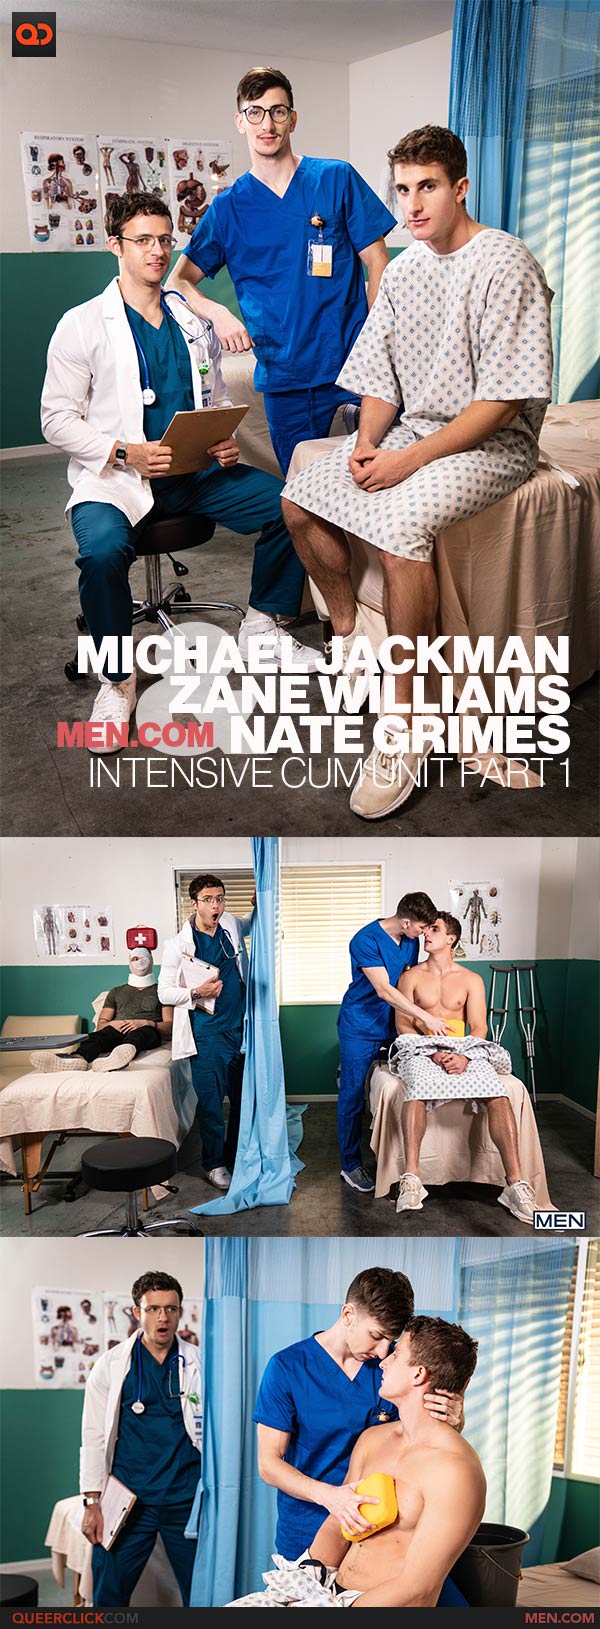 Men.com: Michael Jackman, Nate Grimes and Zane Williams 